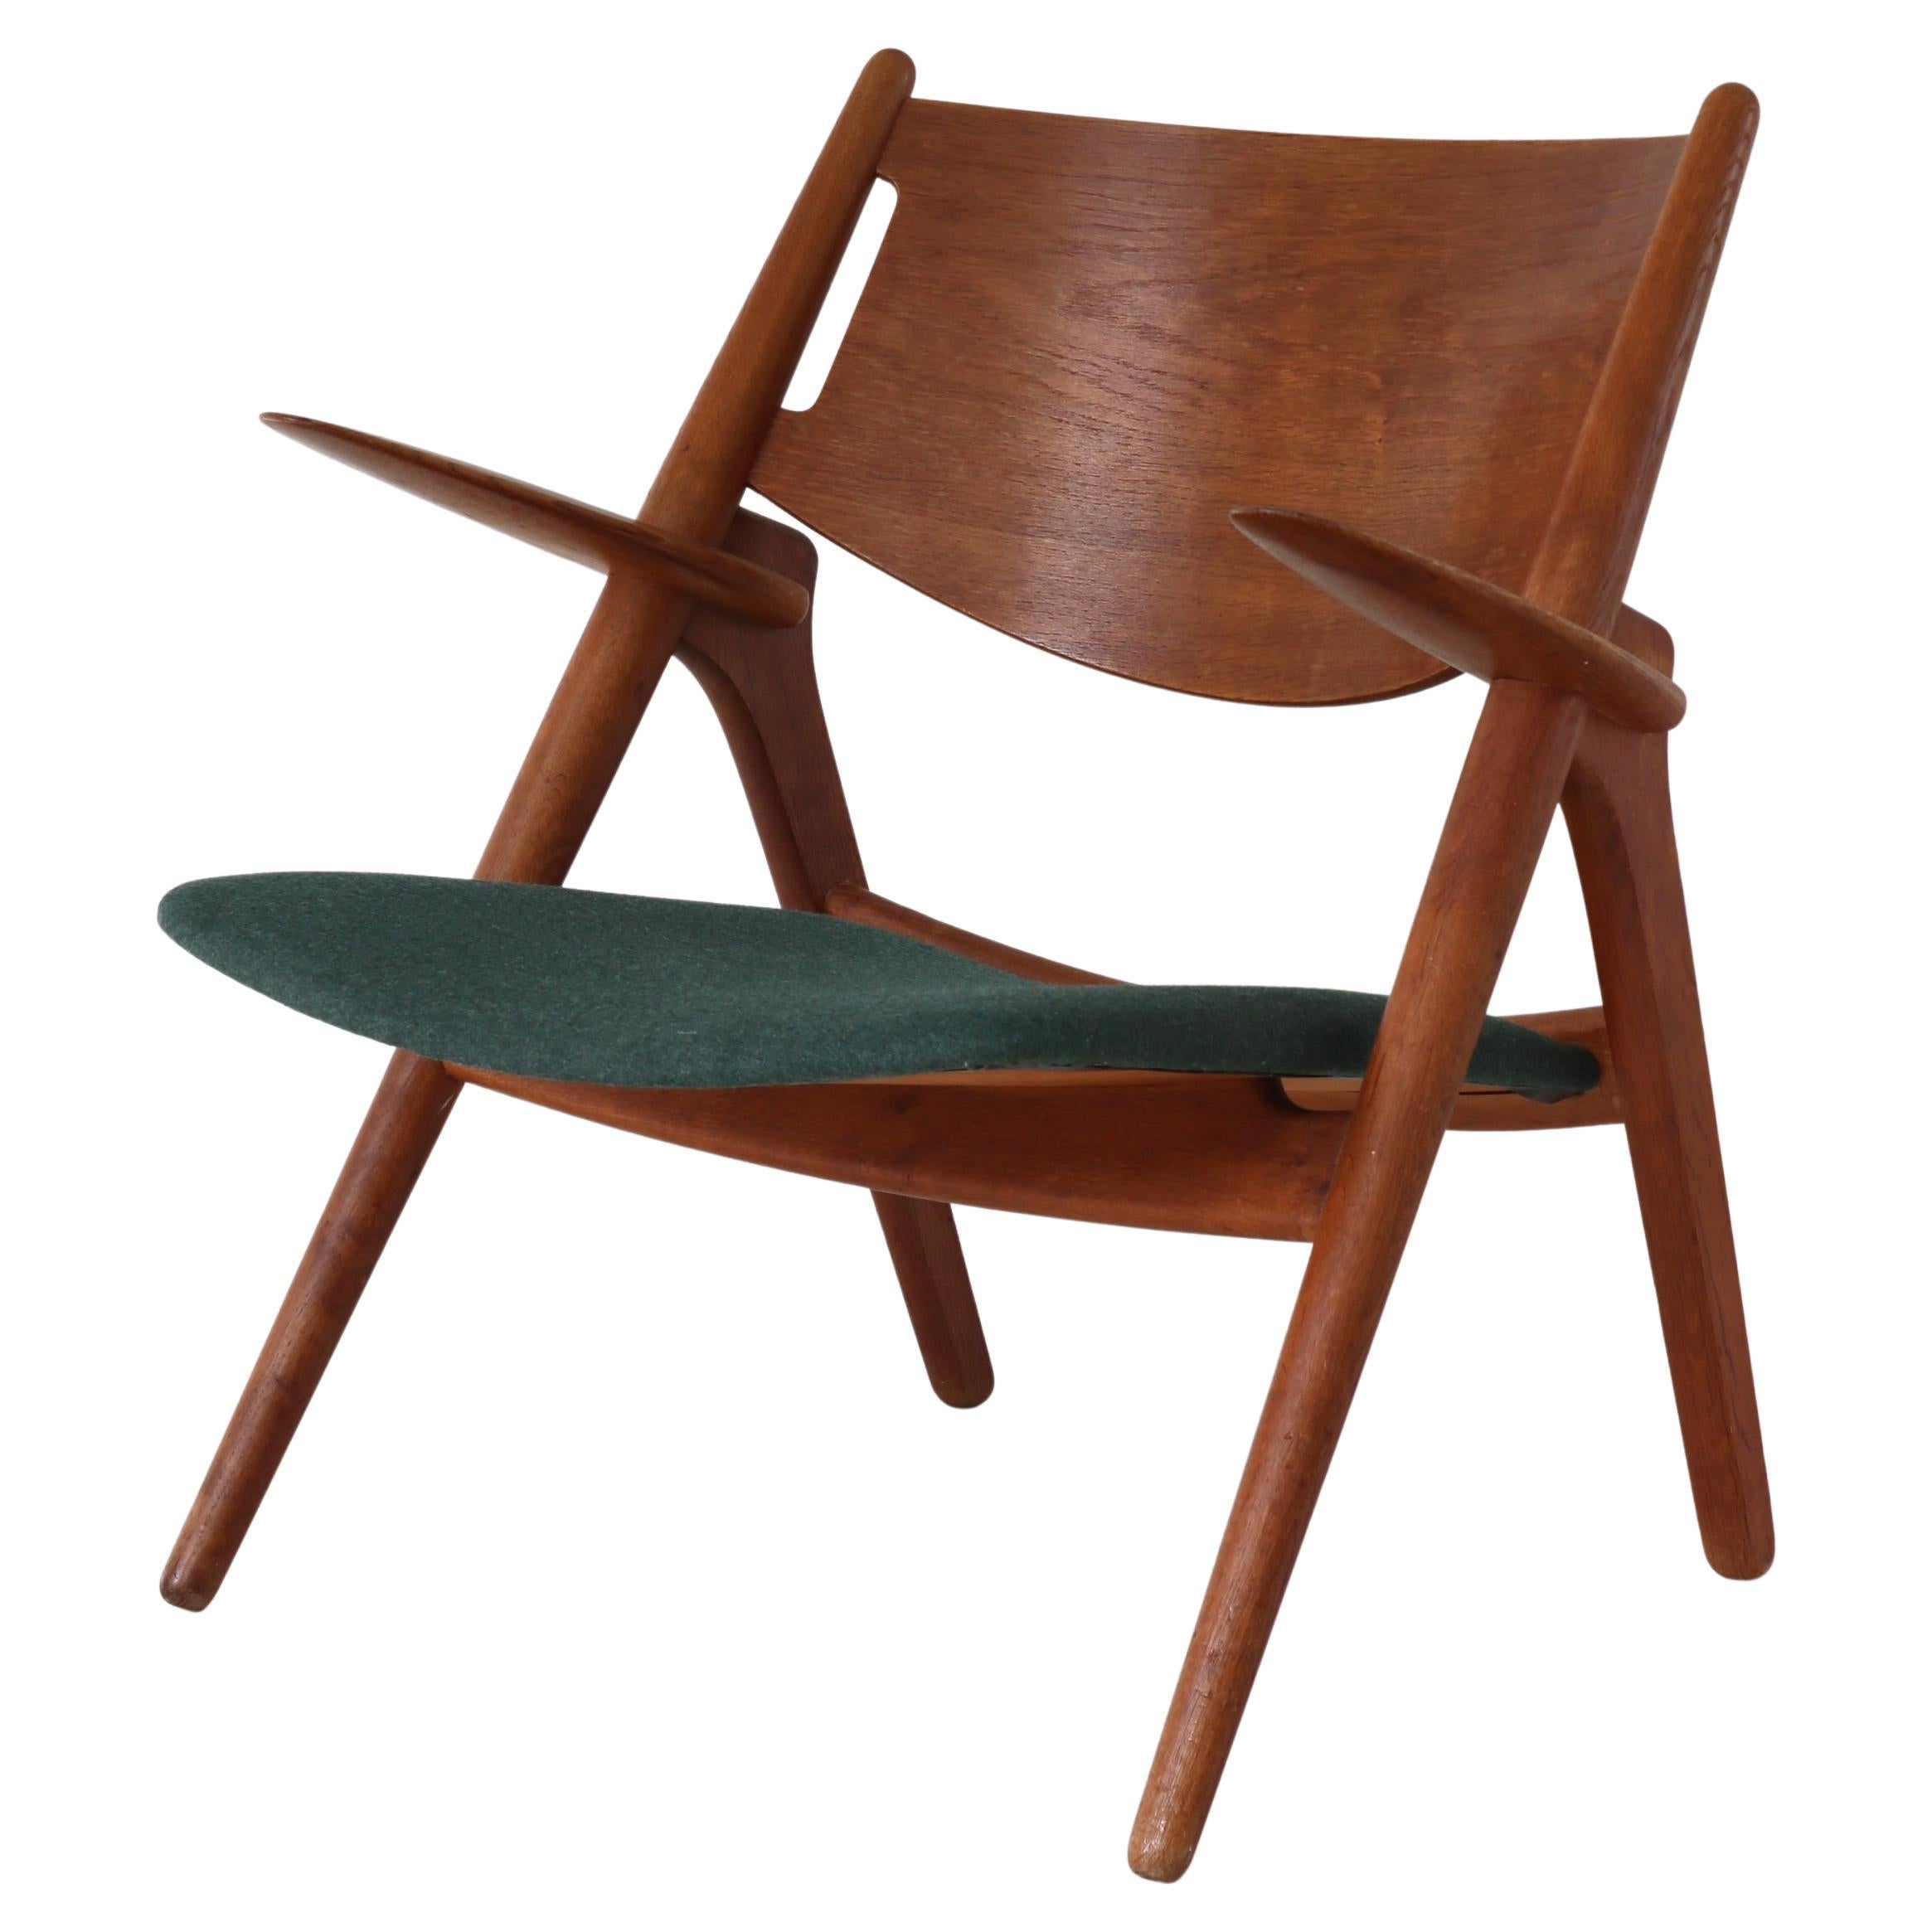 Hans J. Wegner "CH28" Lounge Chair in Patinated Oak, Carl Hansen & Sons, 1950s